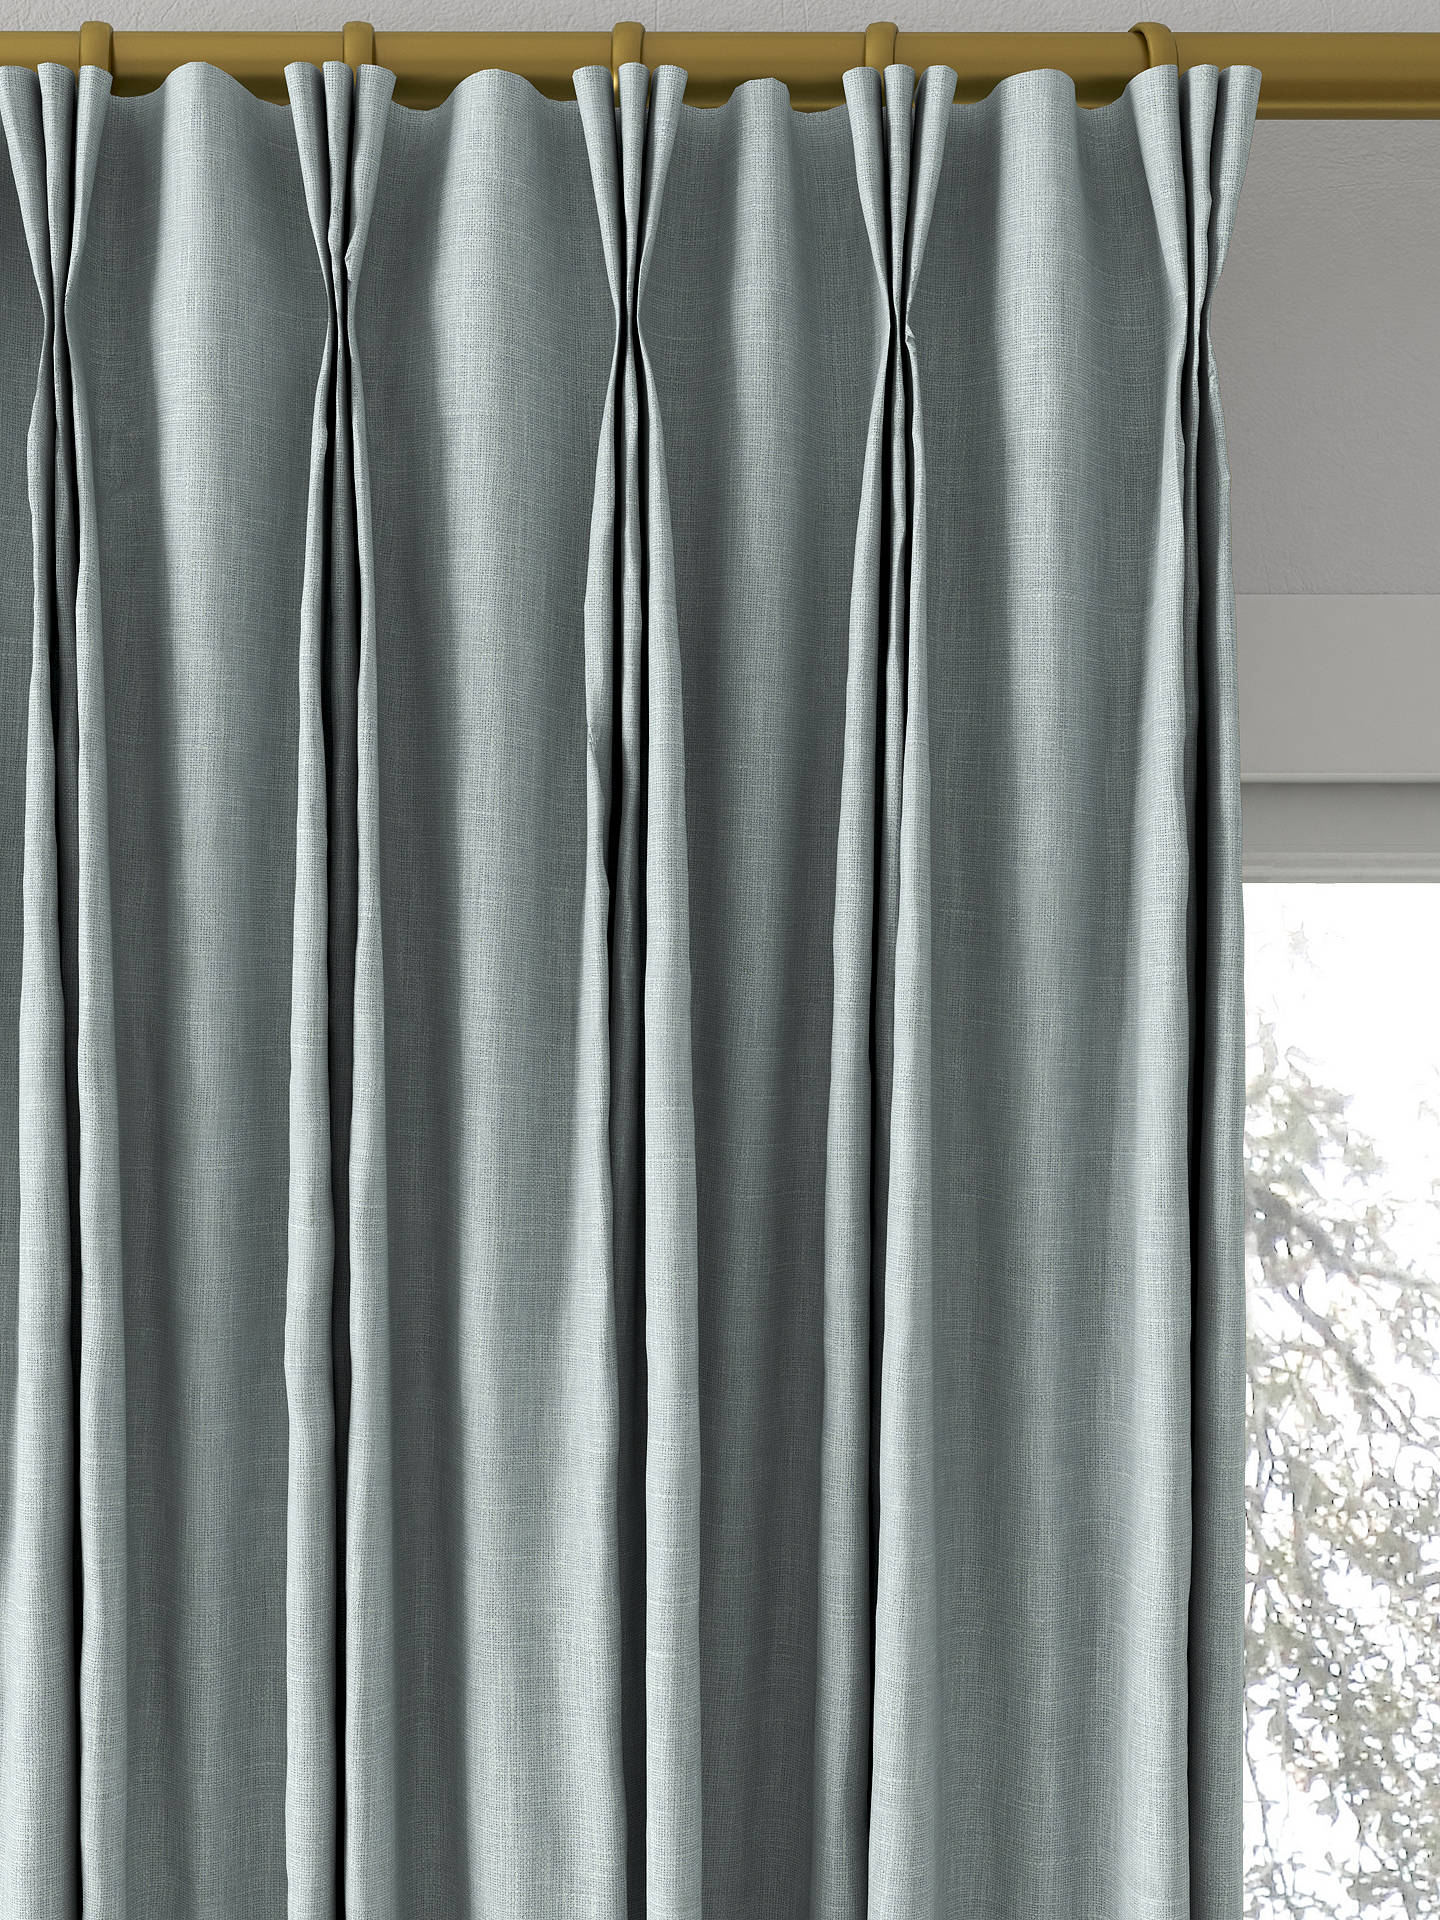 Laura Ashley Easton Made to Measure Curtains, Seaspray